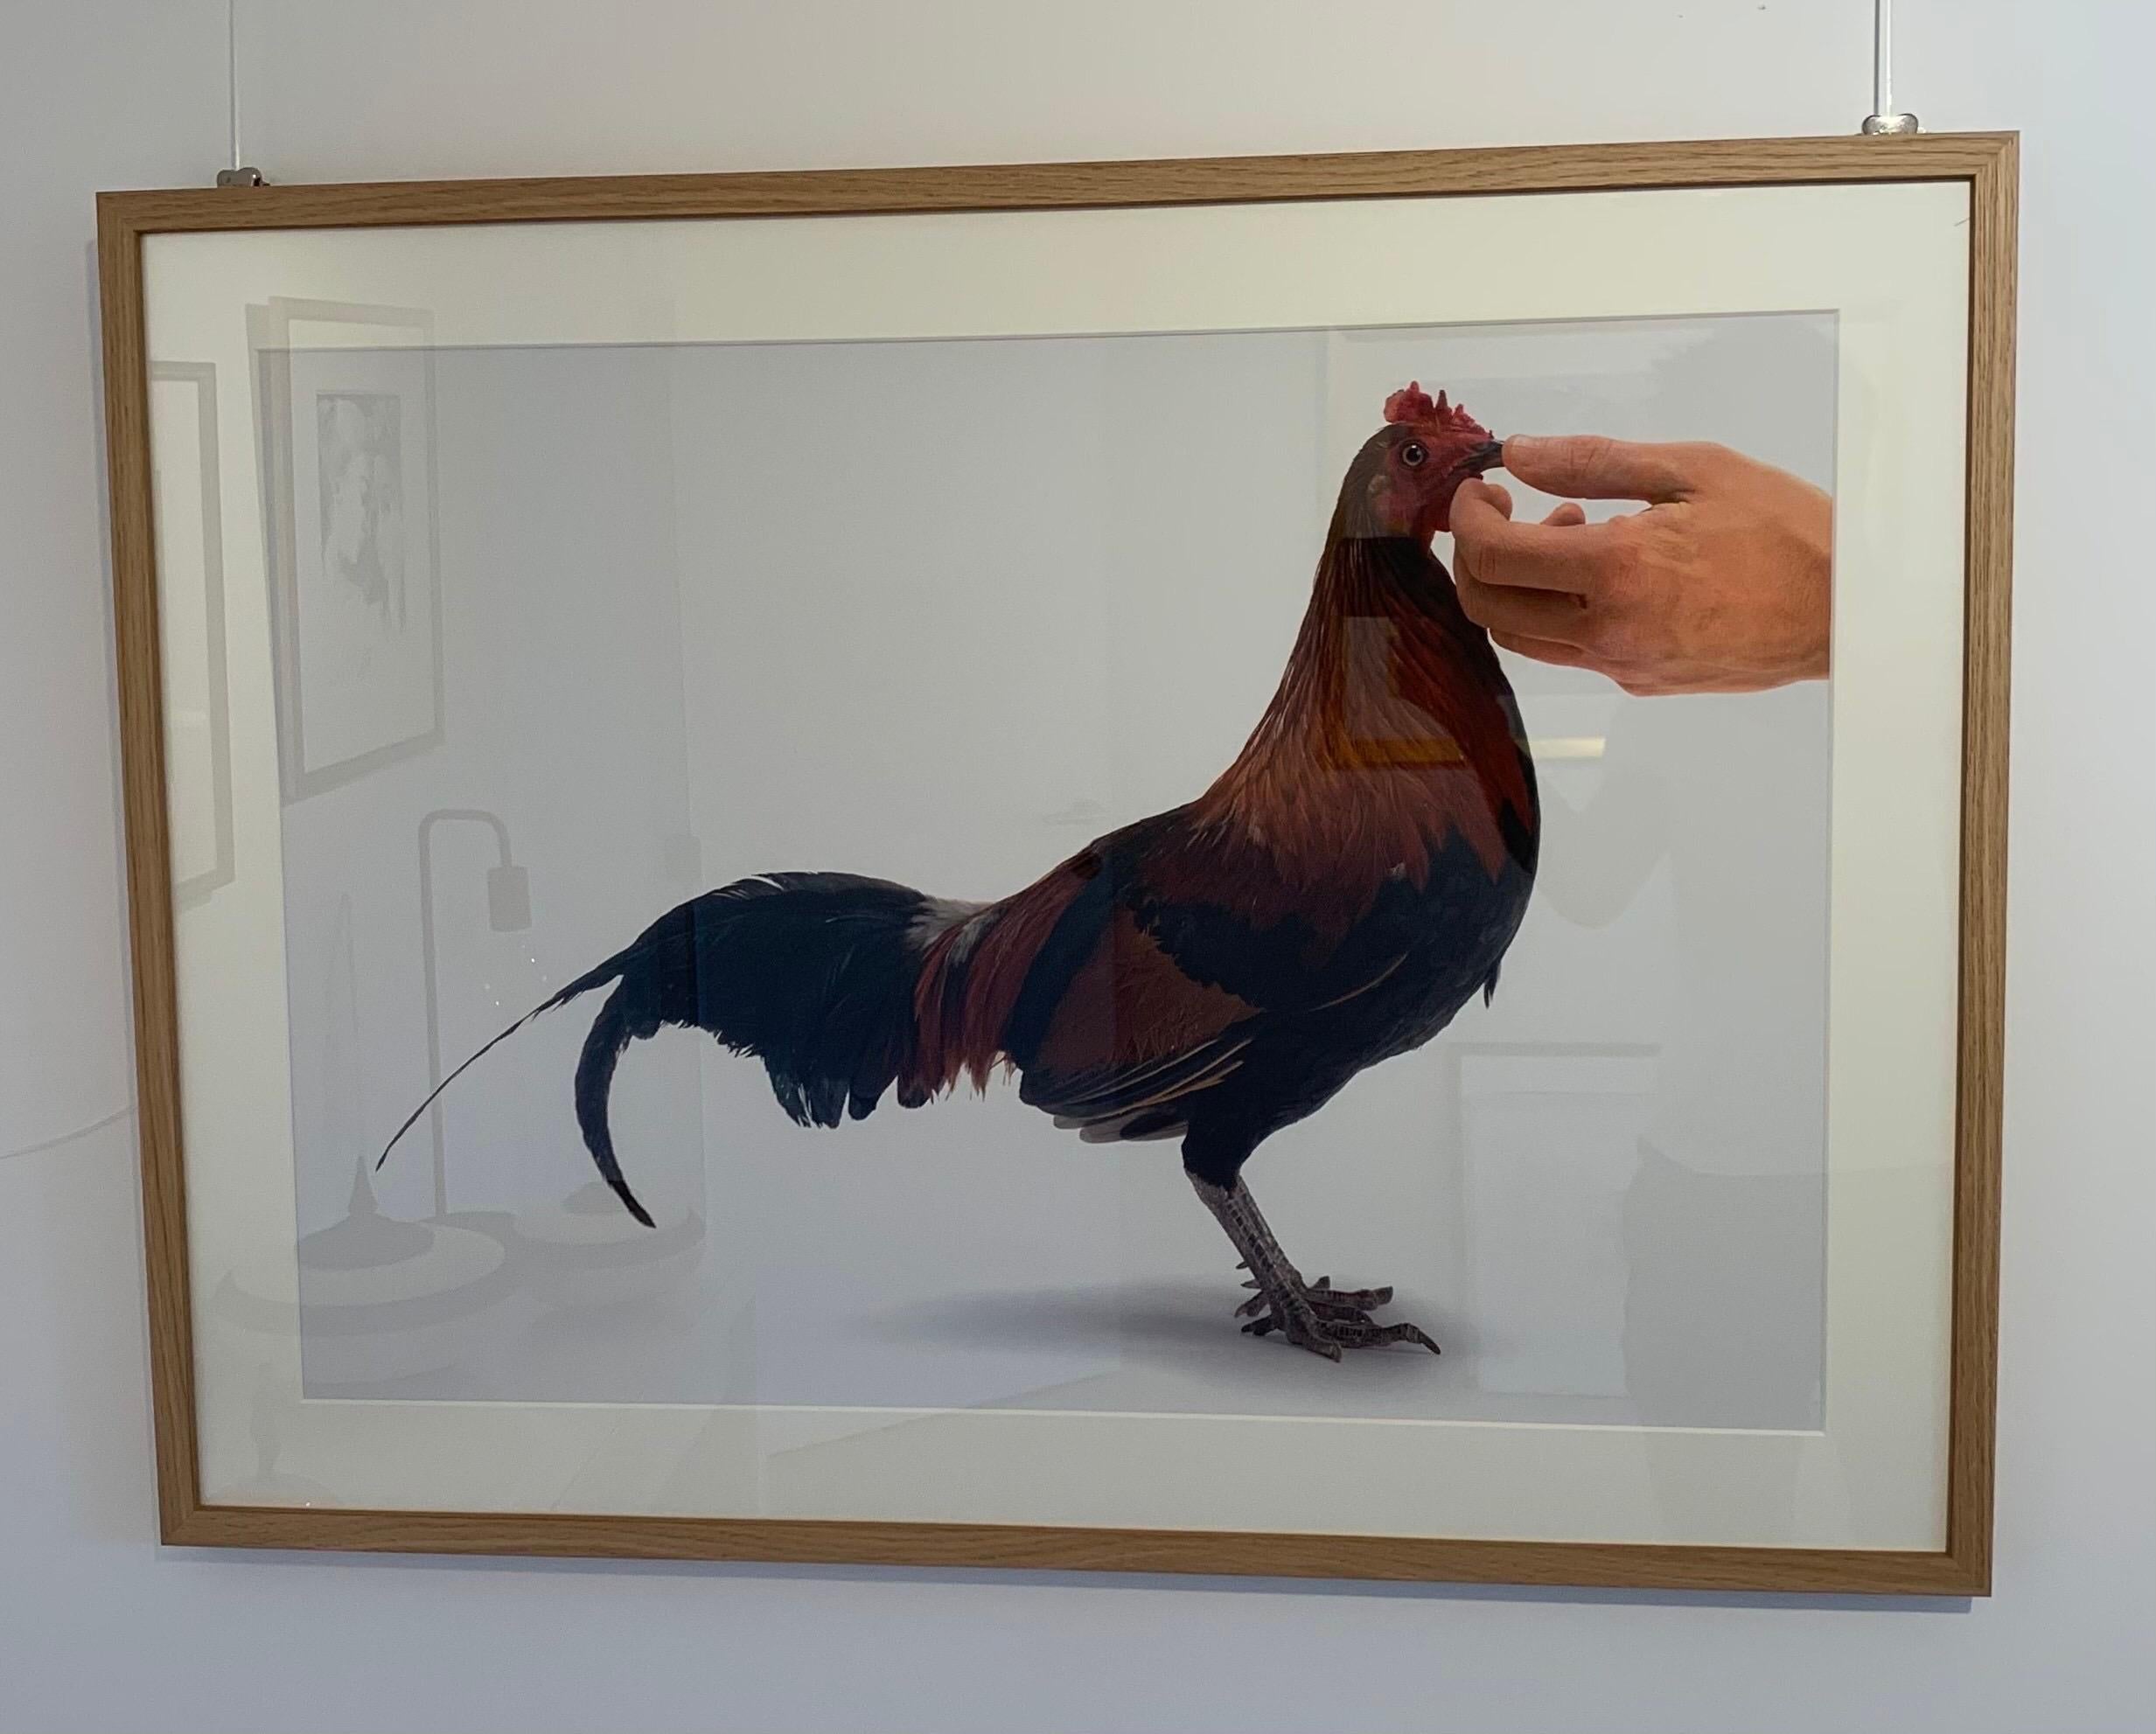 Vanmechelen Koen Animal Print - Feeding Chicken Lithograph